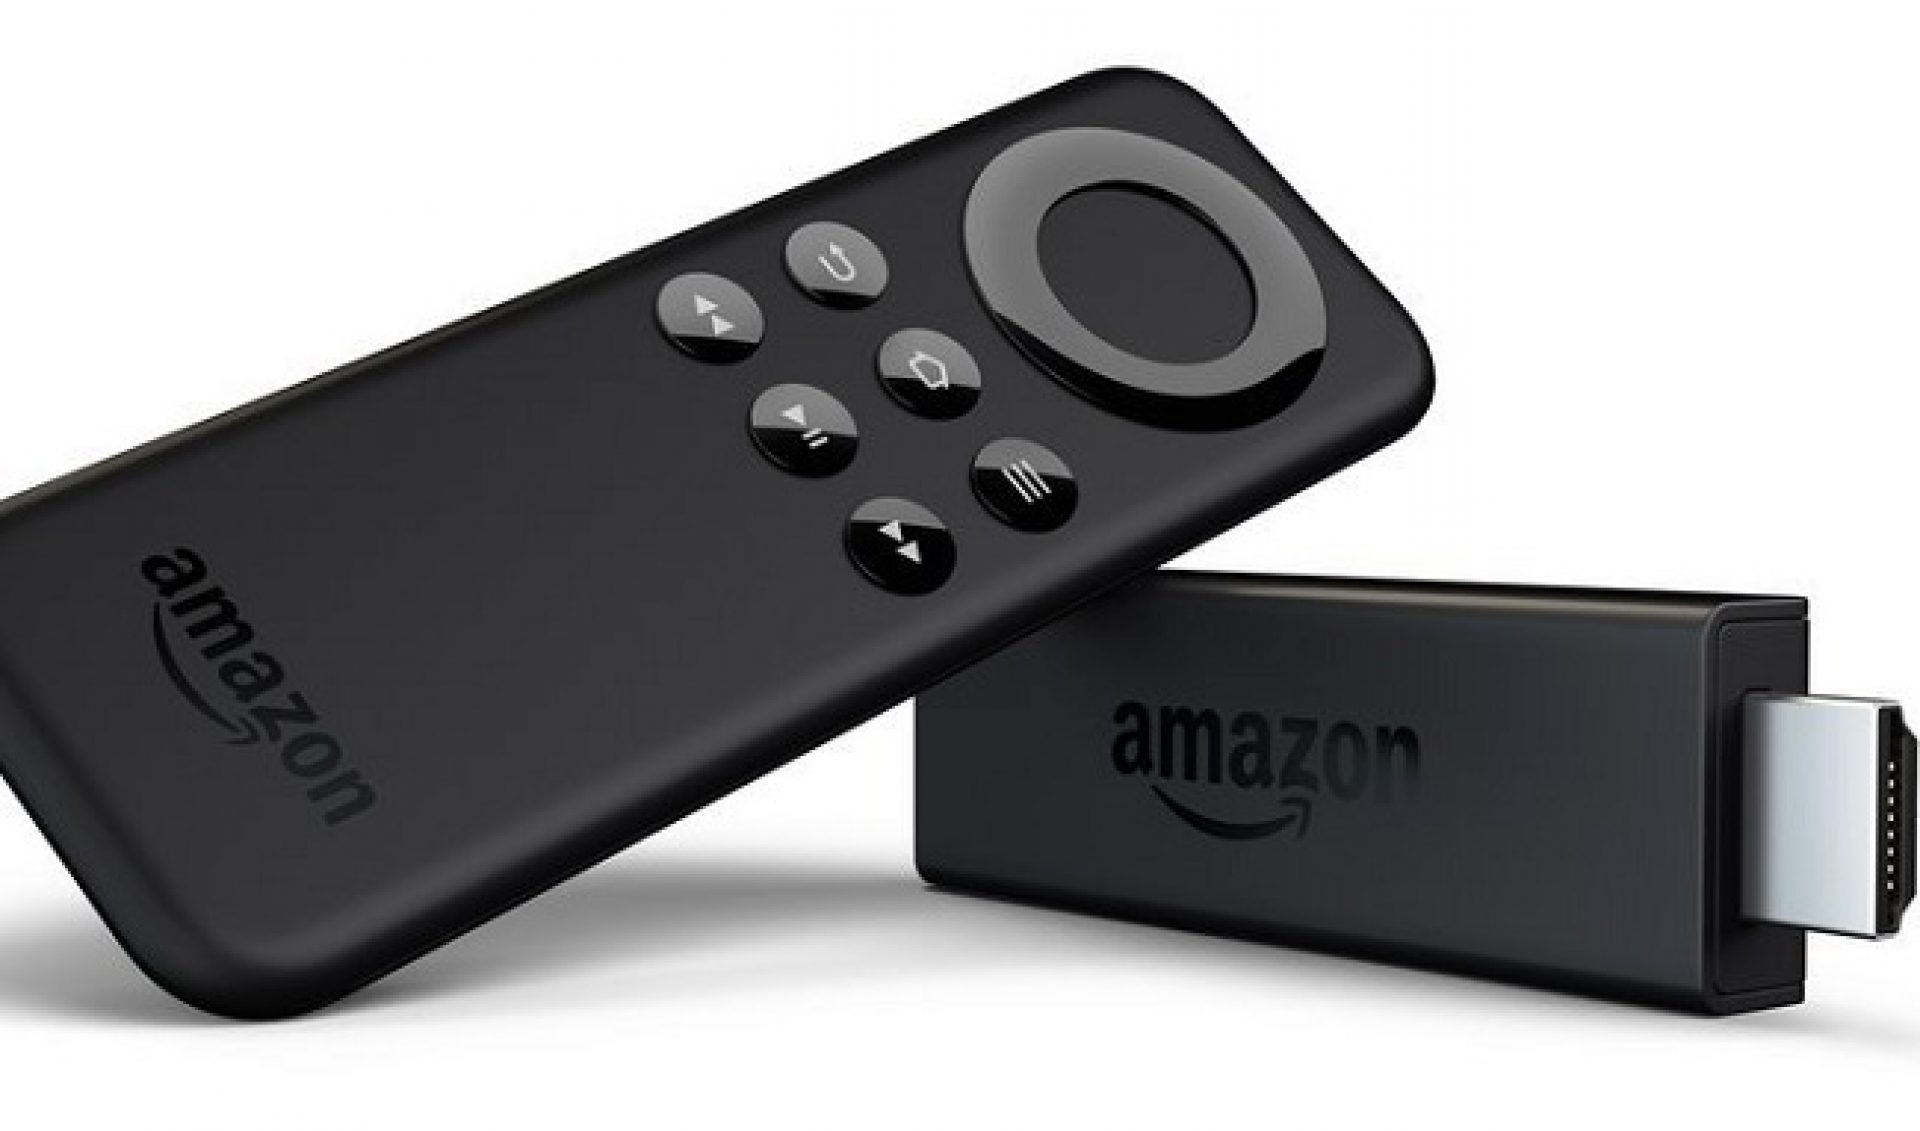 Amazon Reveals Fire TV Stick, Its Answer To Google’s Chromecast